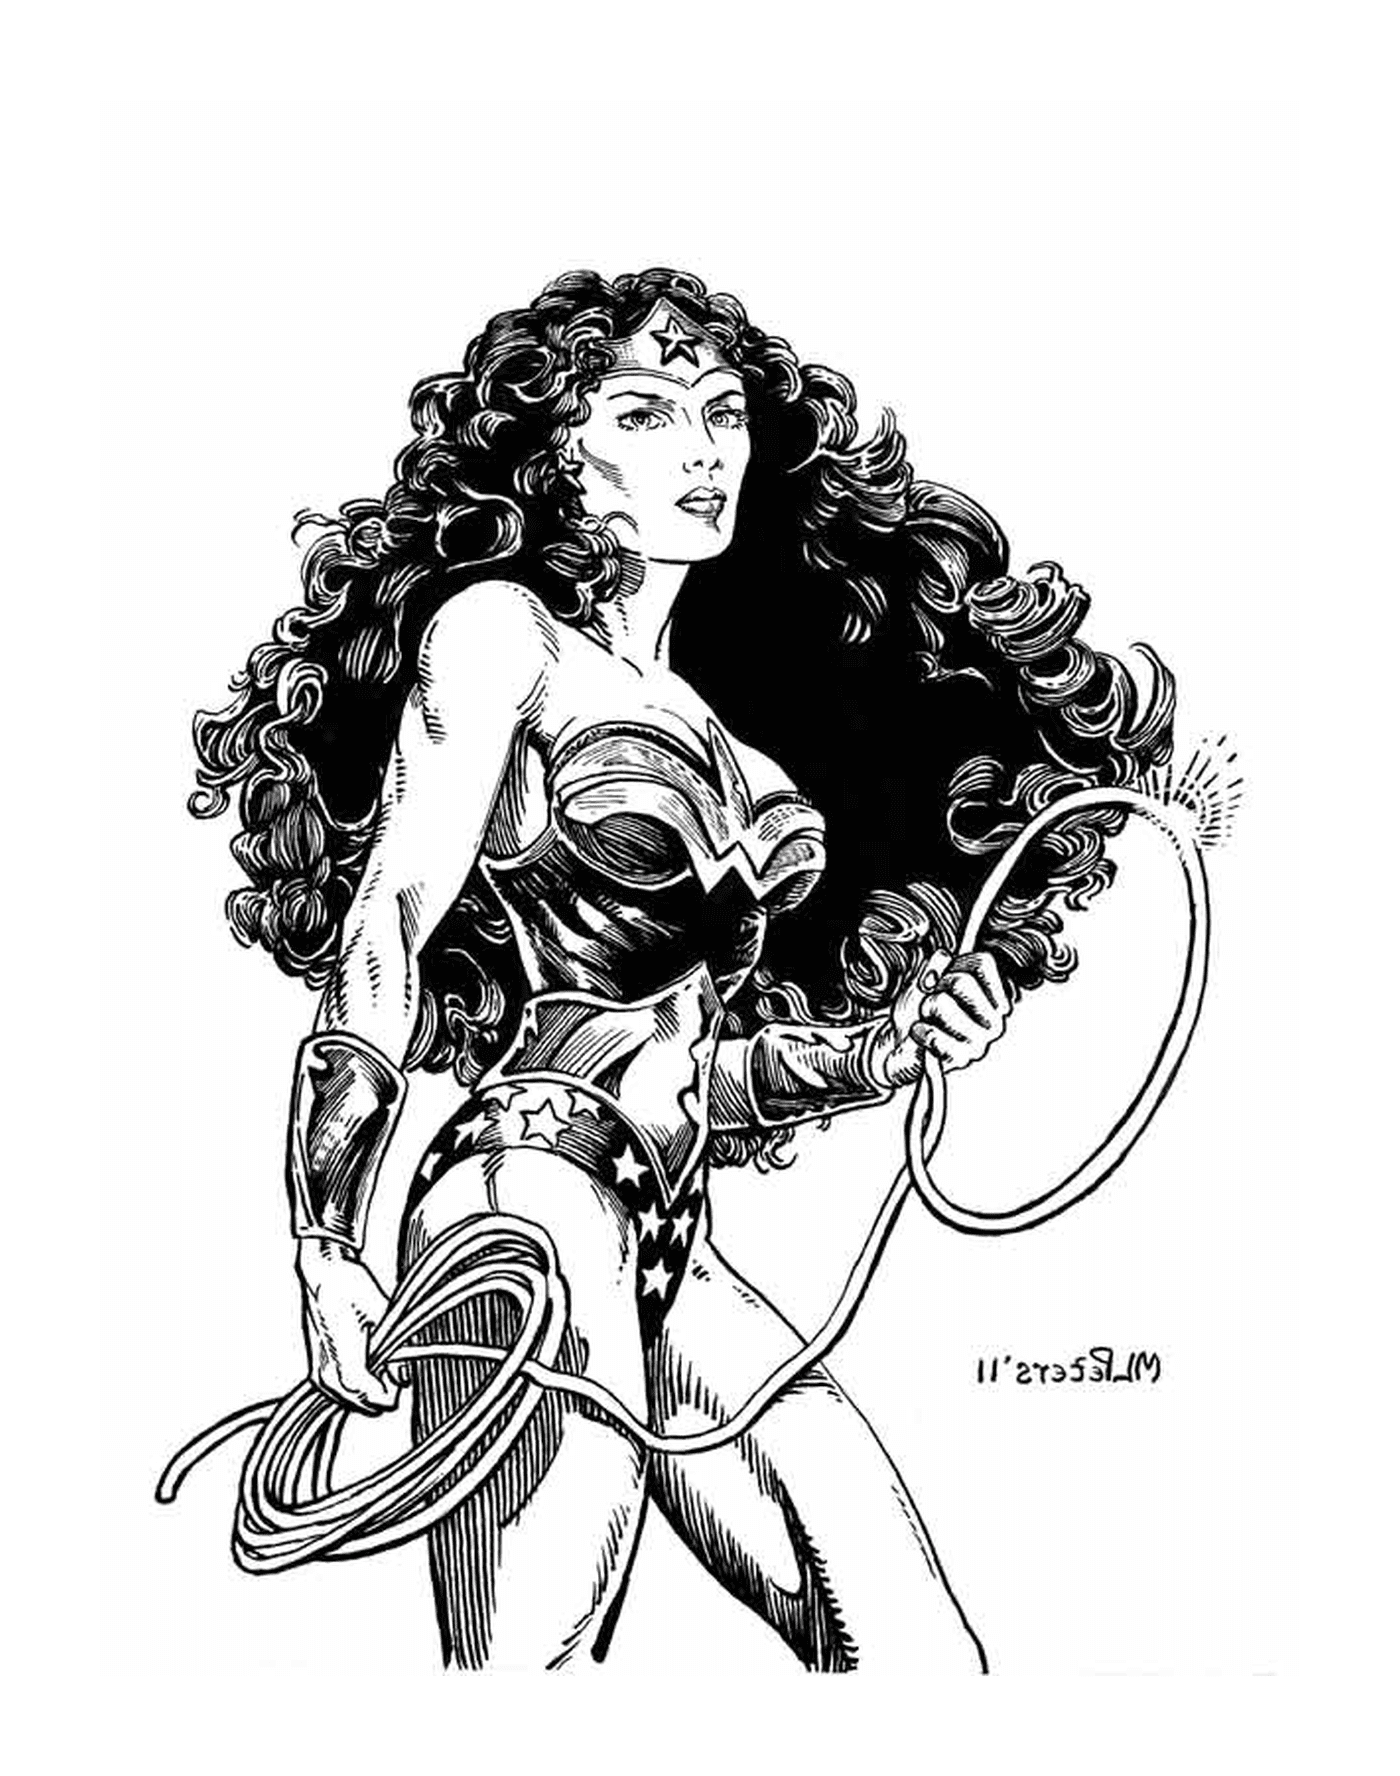  Wonder Woman holding a lasso 